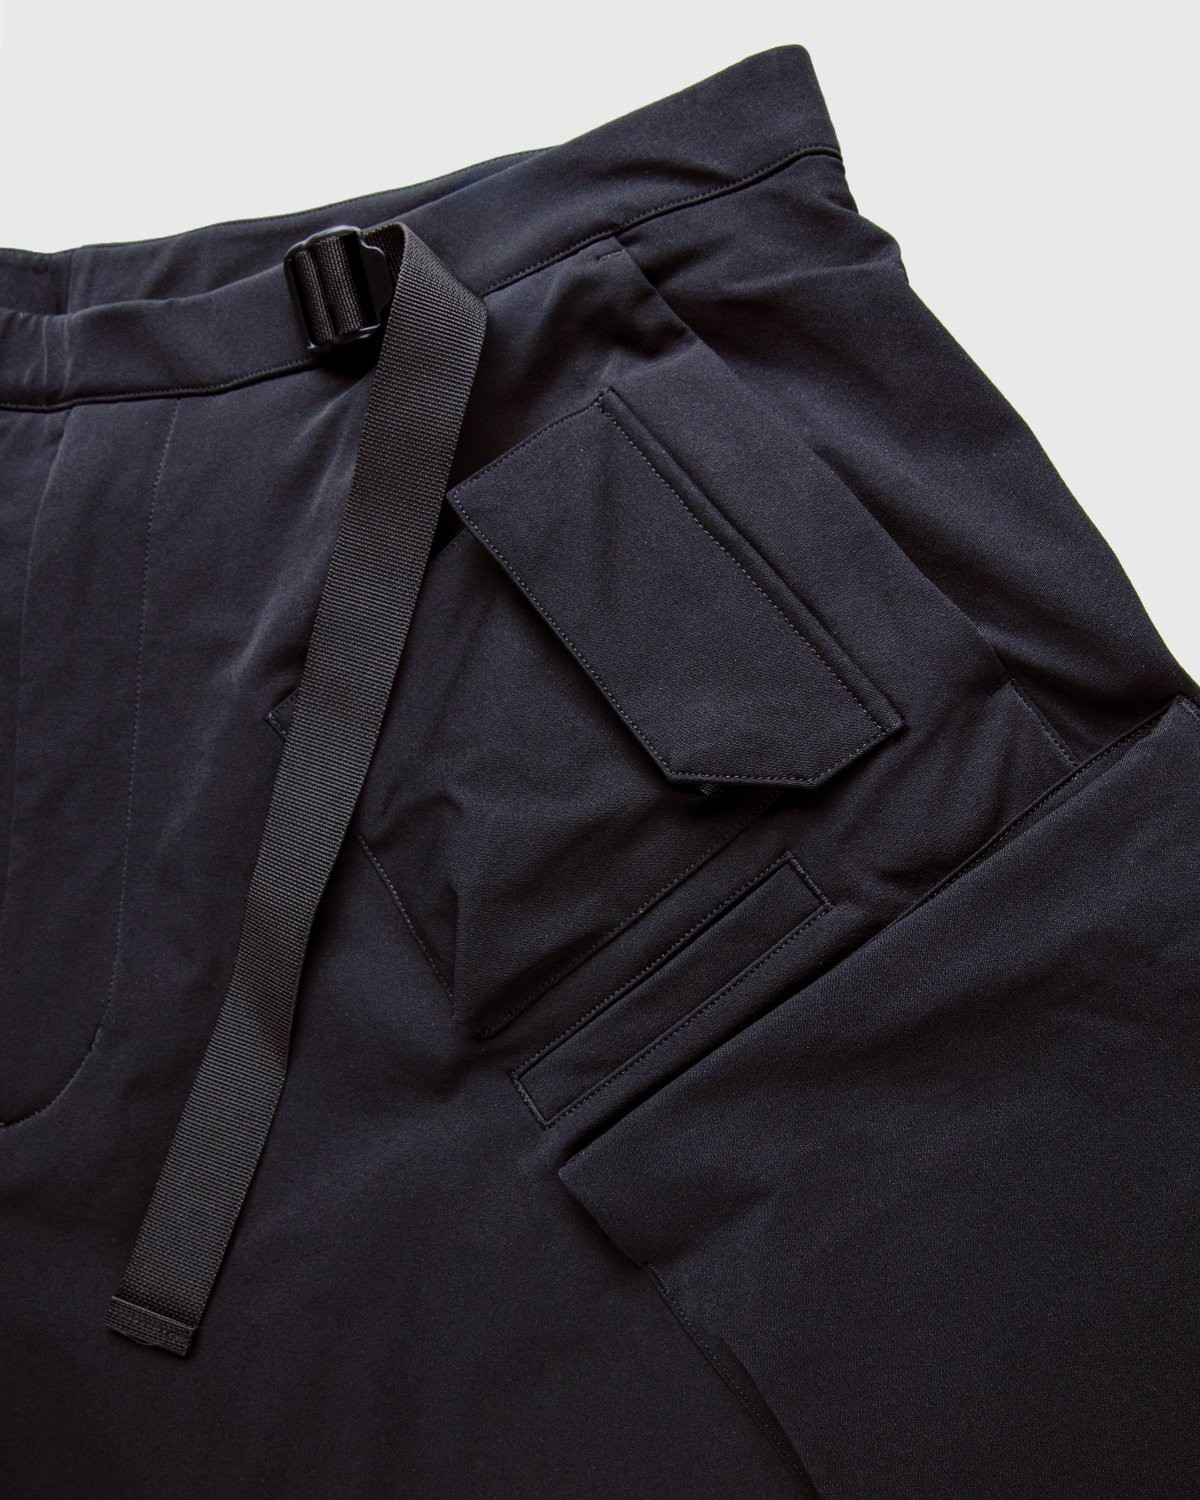 ACRONYM – P30A-DS Pants Black | Highsnobiety Shop